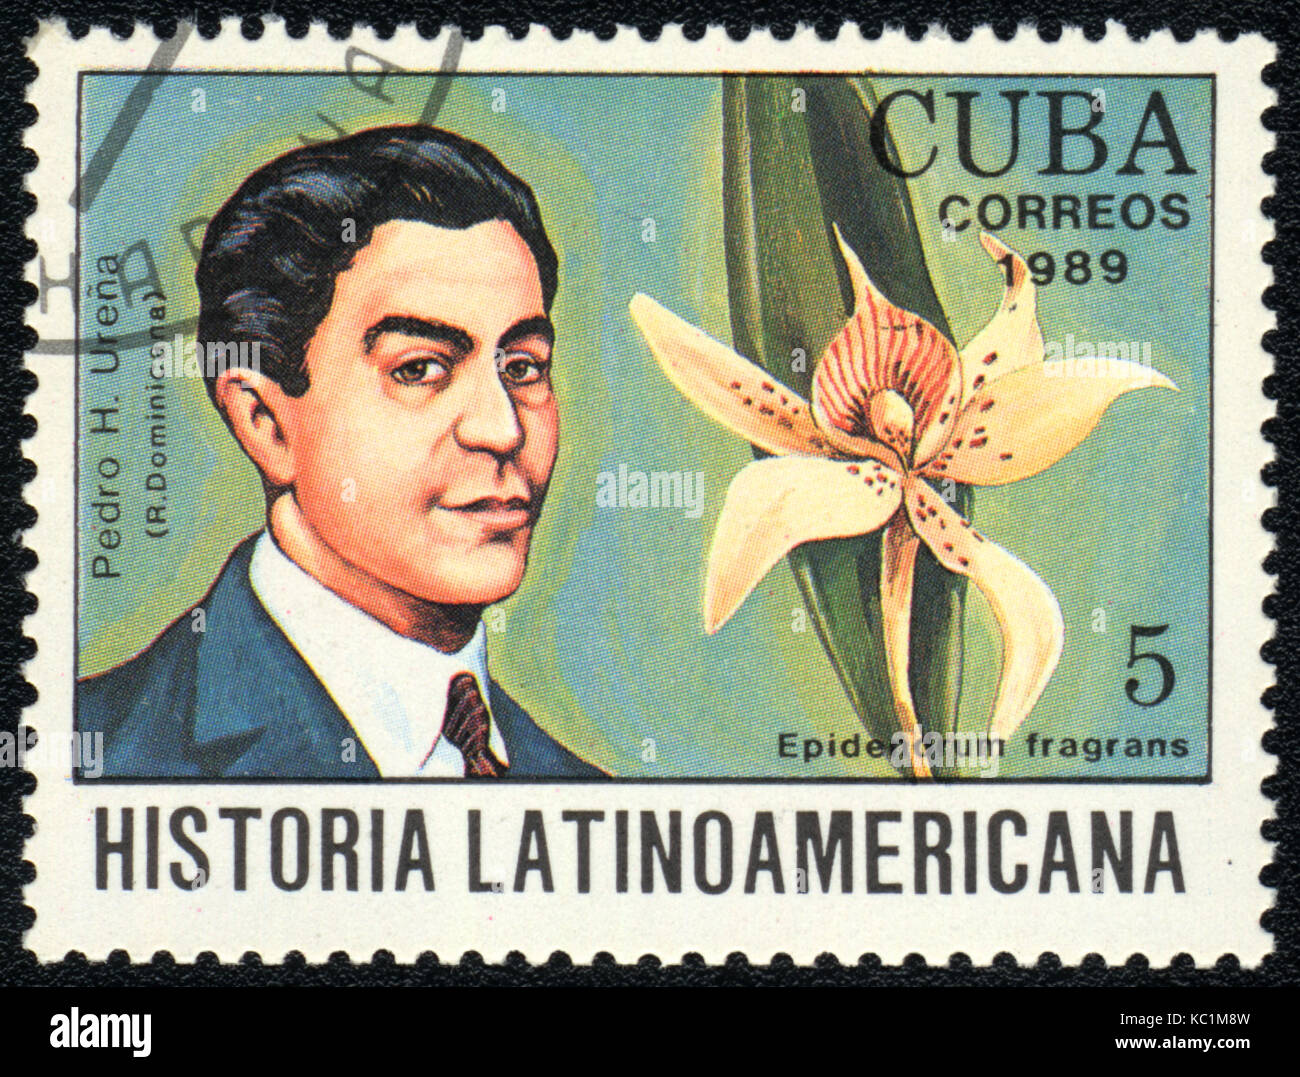 A postage stamp printed in CUBA  shows  a Epidendrum fragrans and Pedro Henríquez Ureña, series 'Historia Latinoamericana', circa 1989 Stock Photo